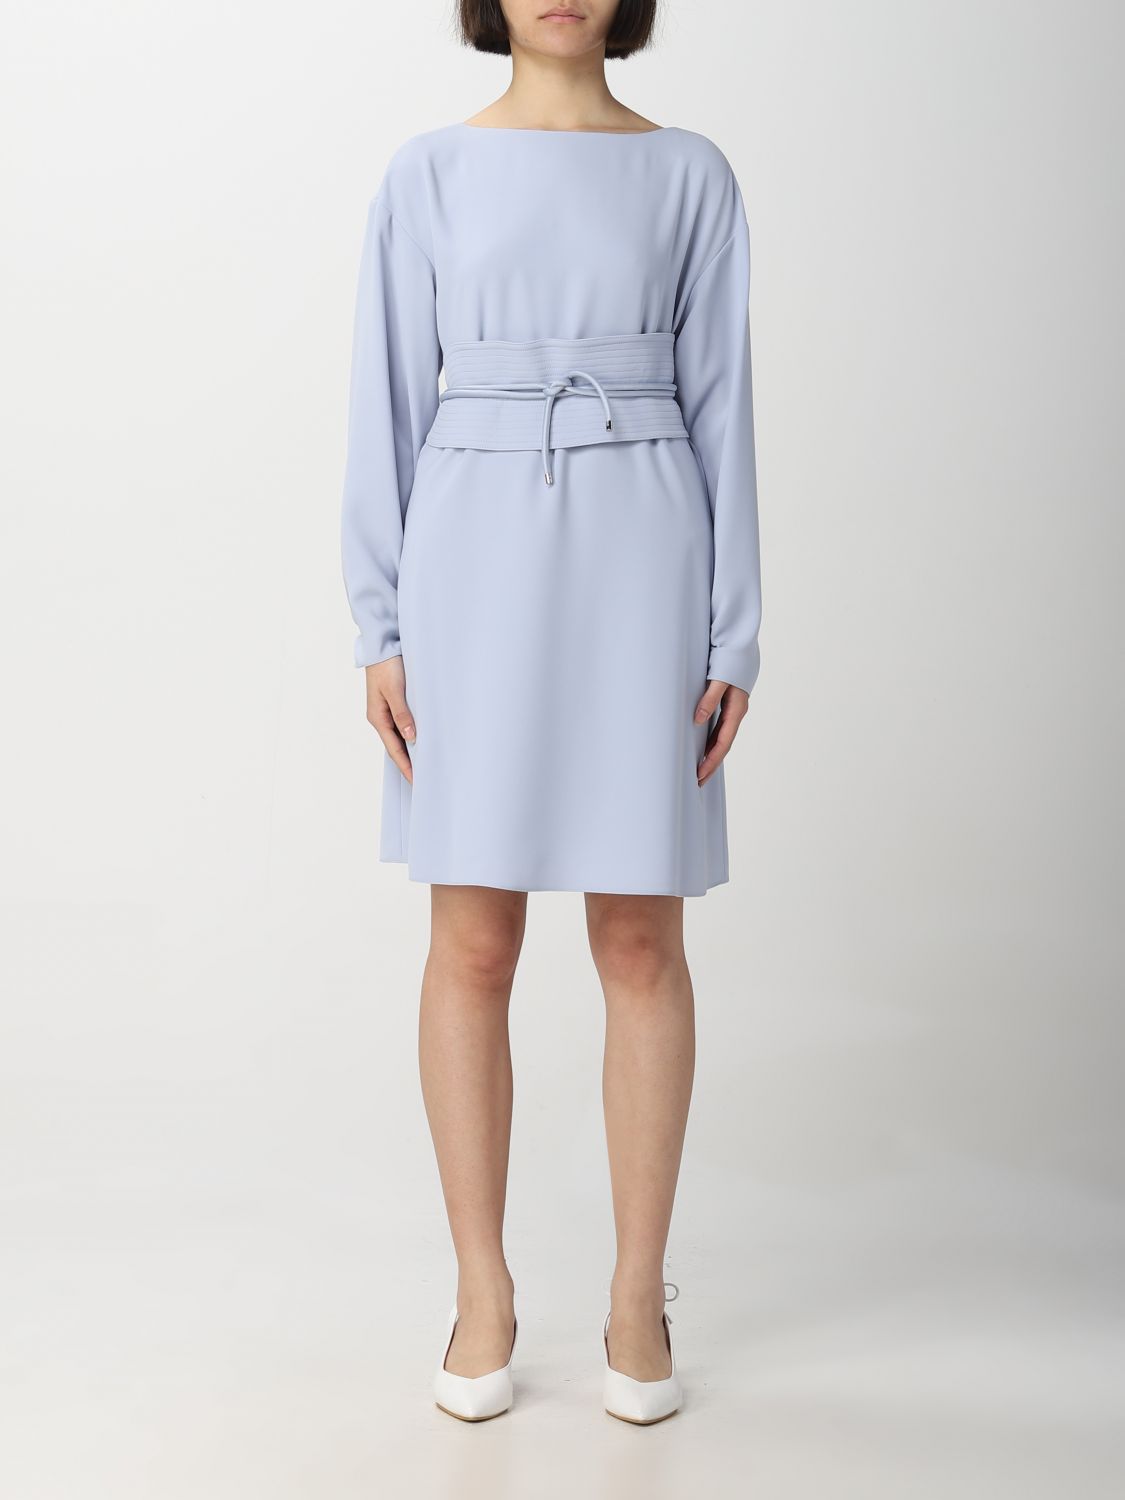 EMPORIO ARMANI: dress for woman - Sky Blue | Emporio Armani dress  D4NA1H2NWAZ online on 